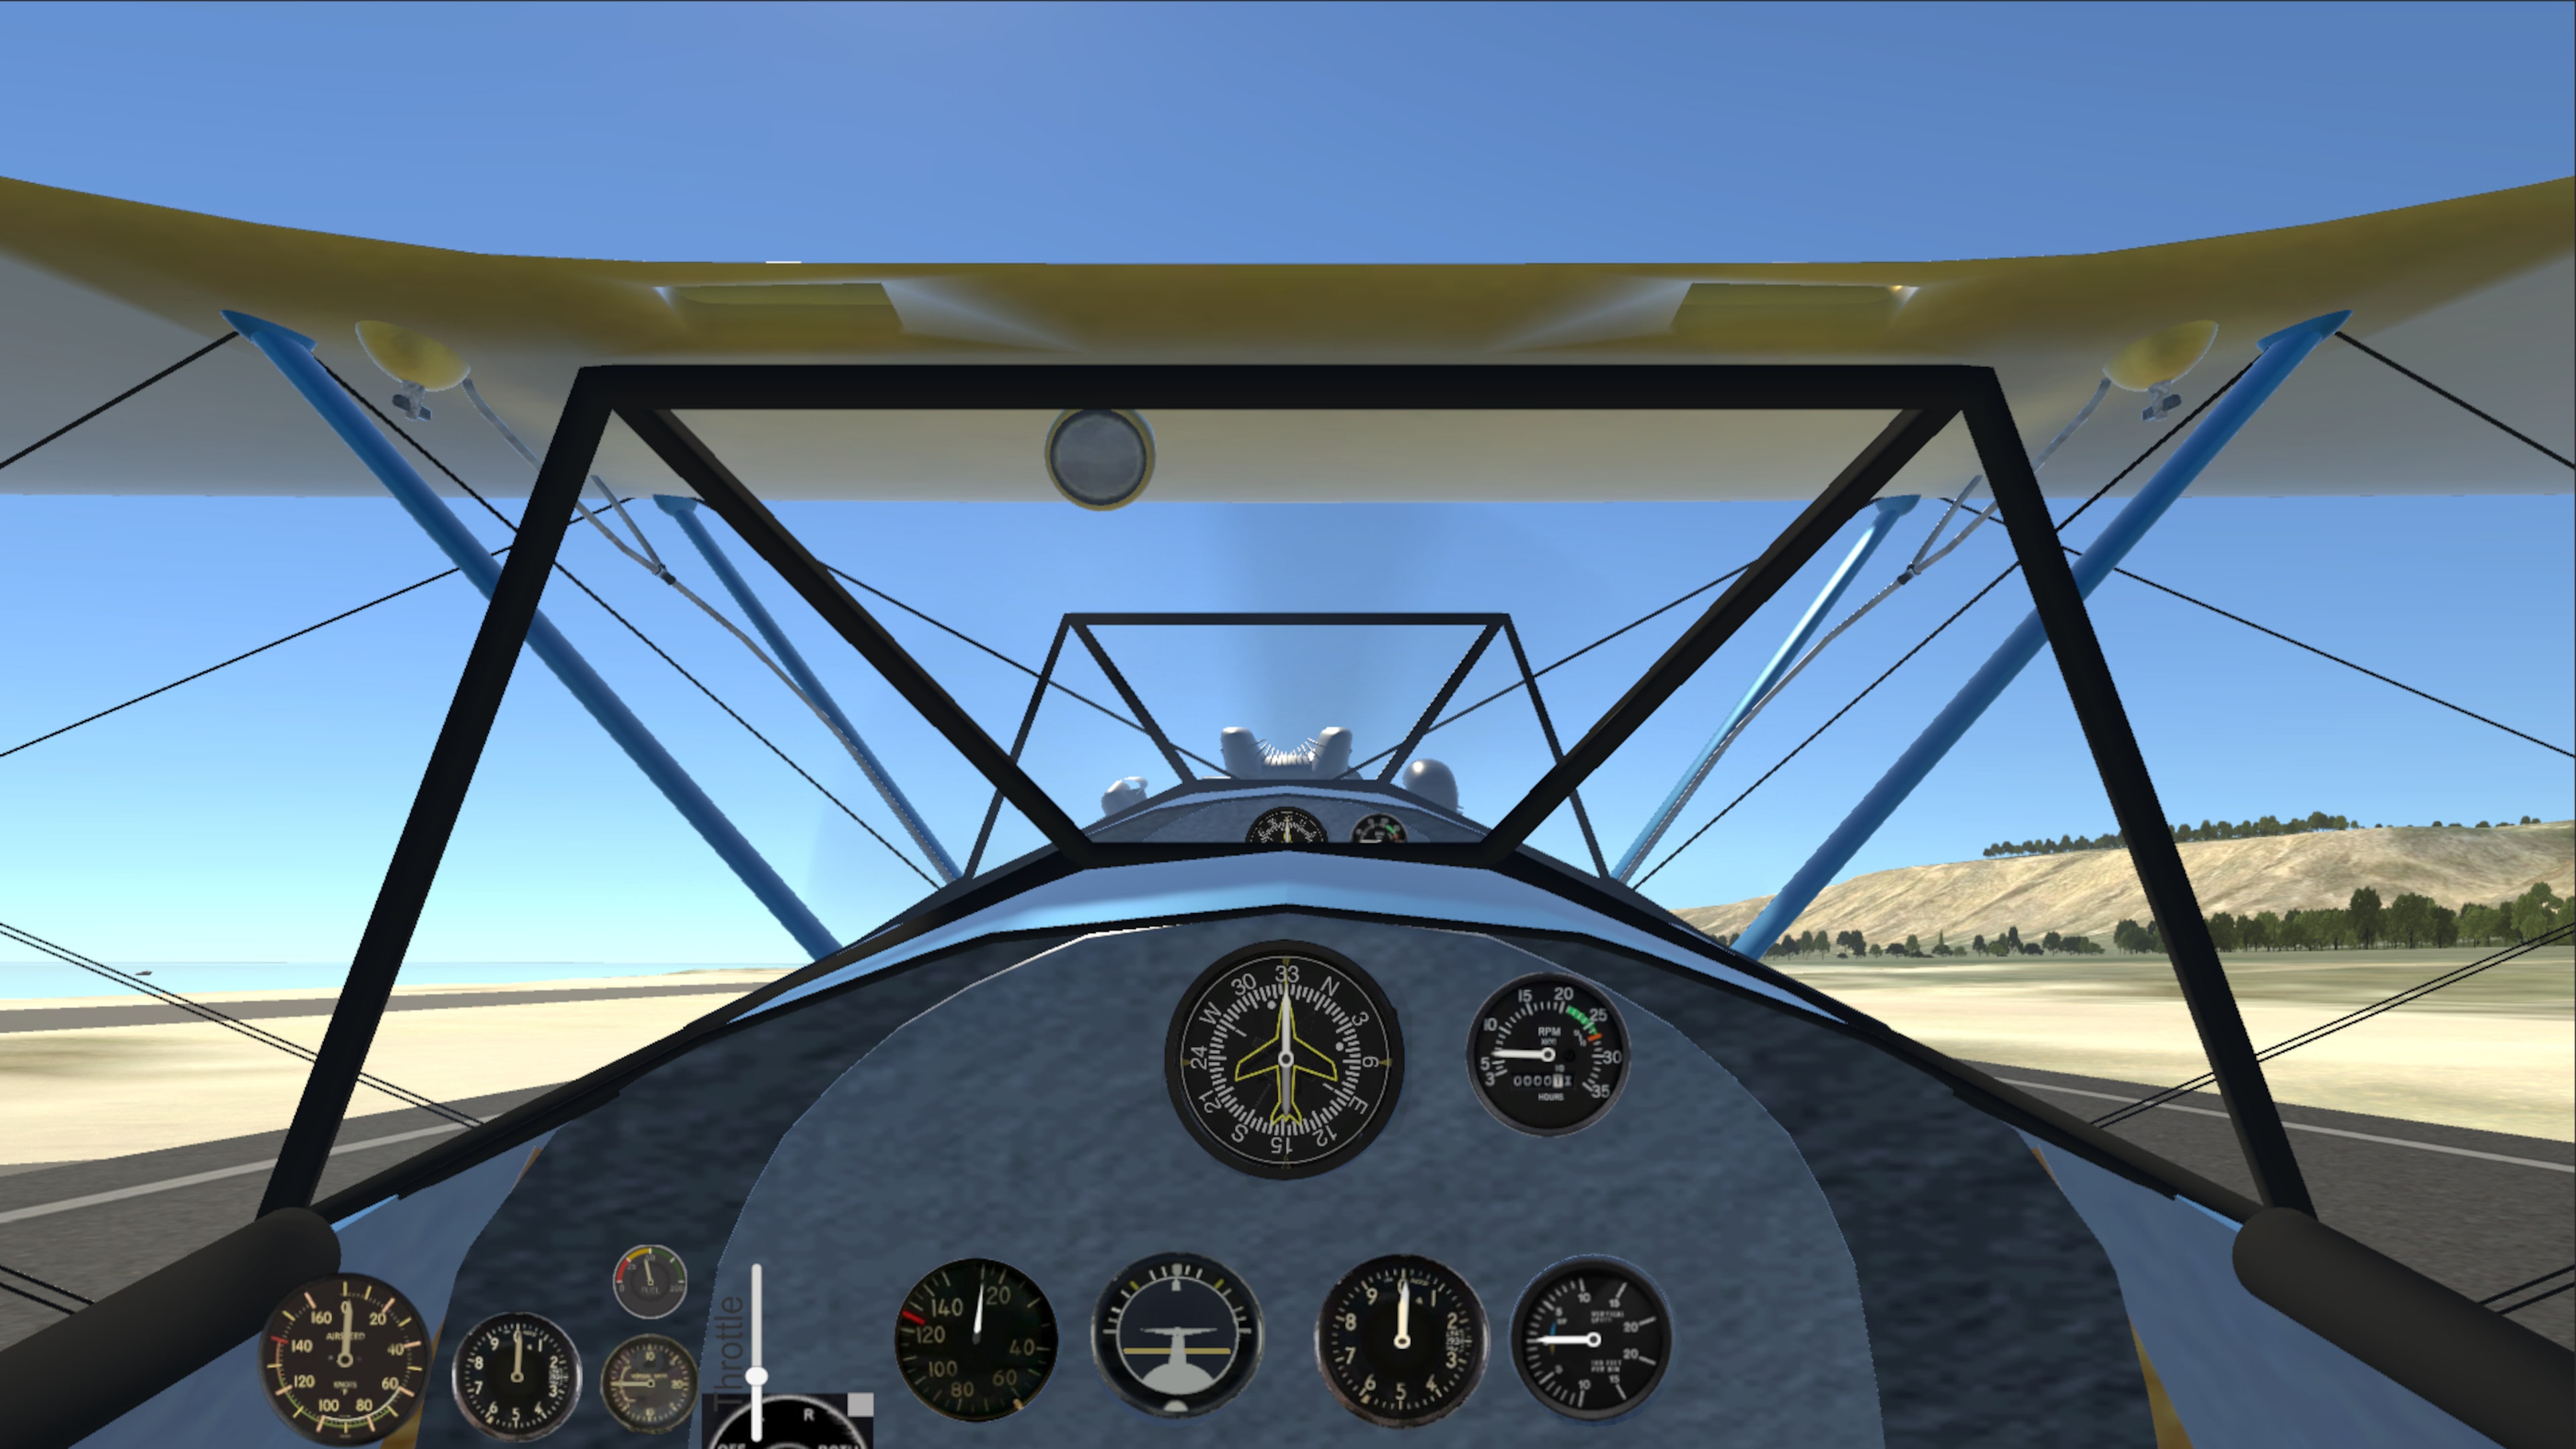 Universal Flight Simulator for PS4